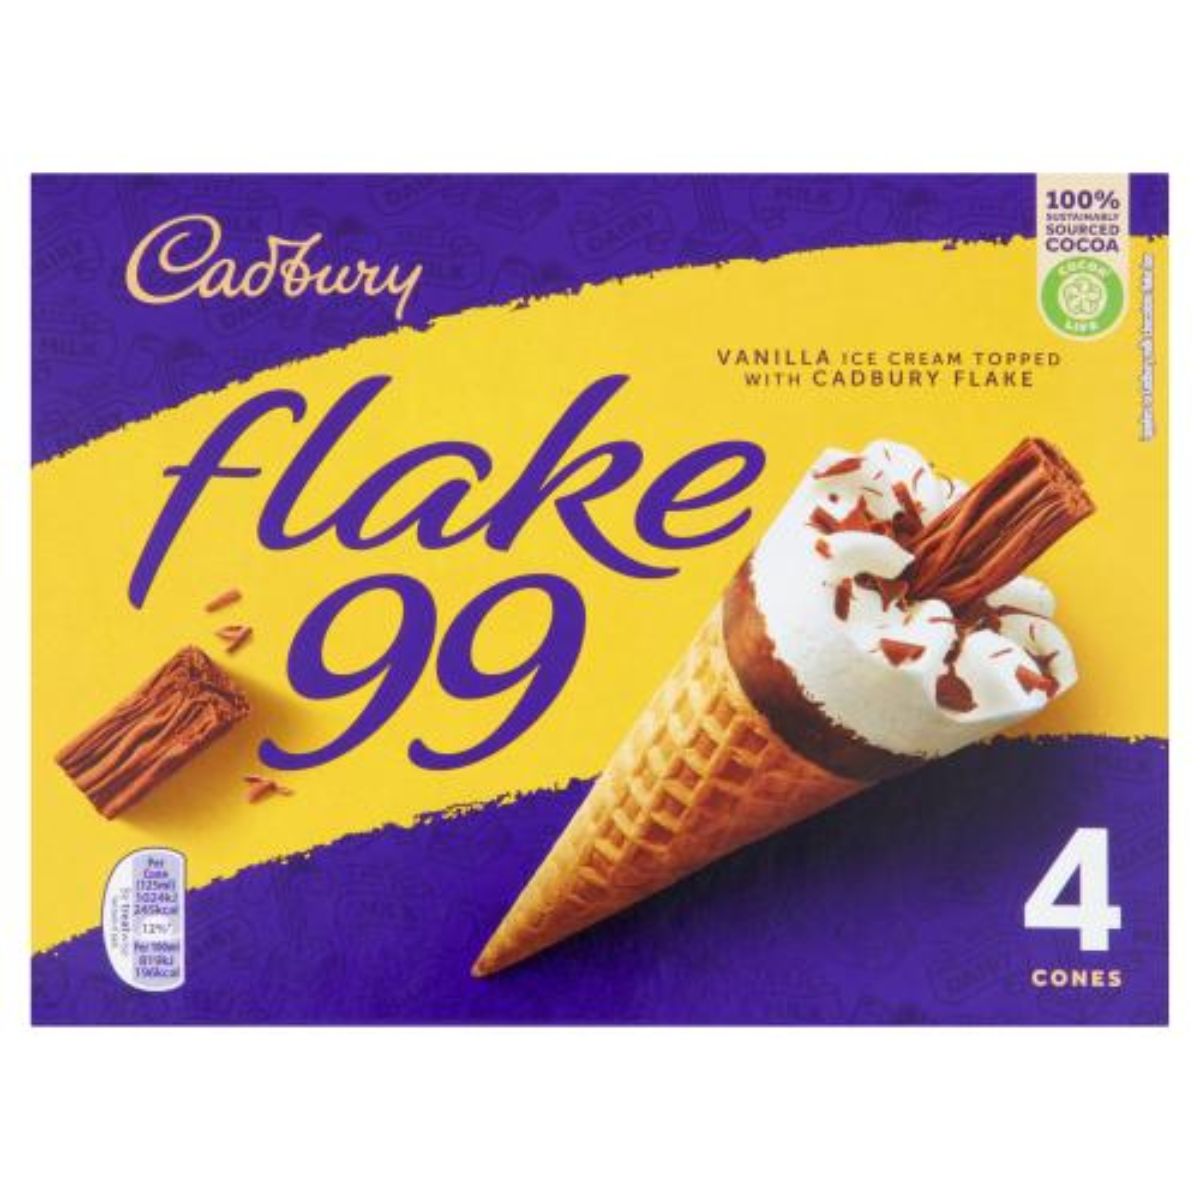 A box of Cadbury - Flake 99 Ice Cream Cones - 4 x 125ml.